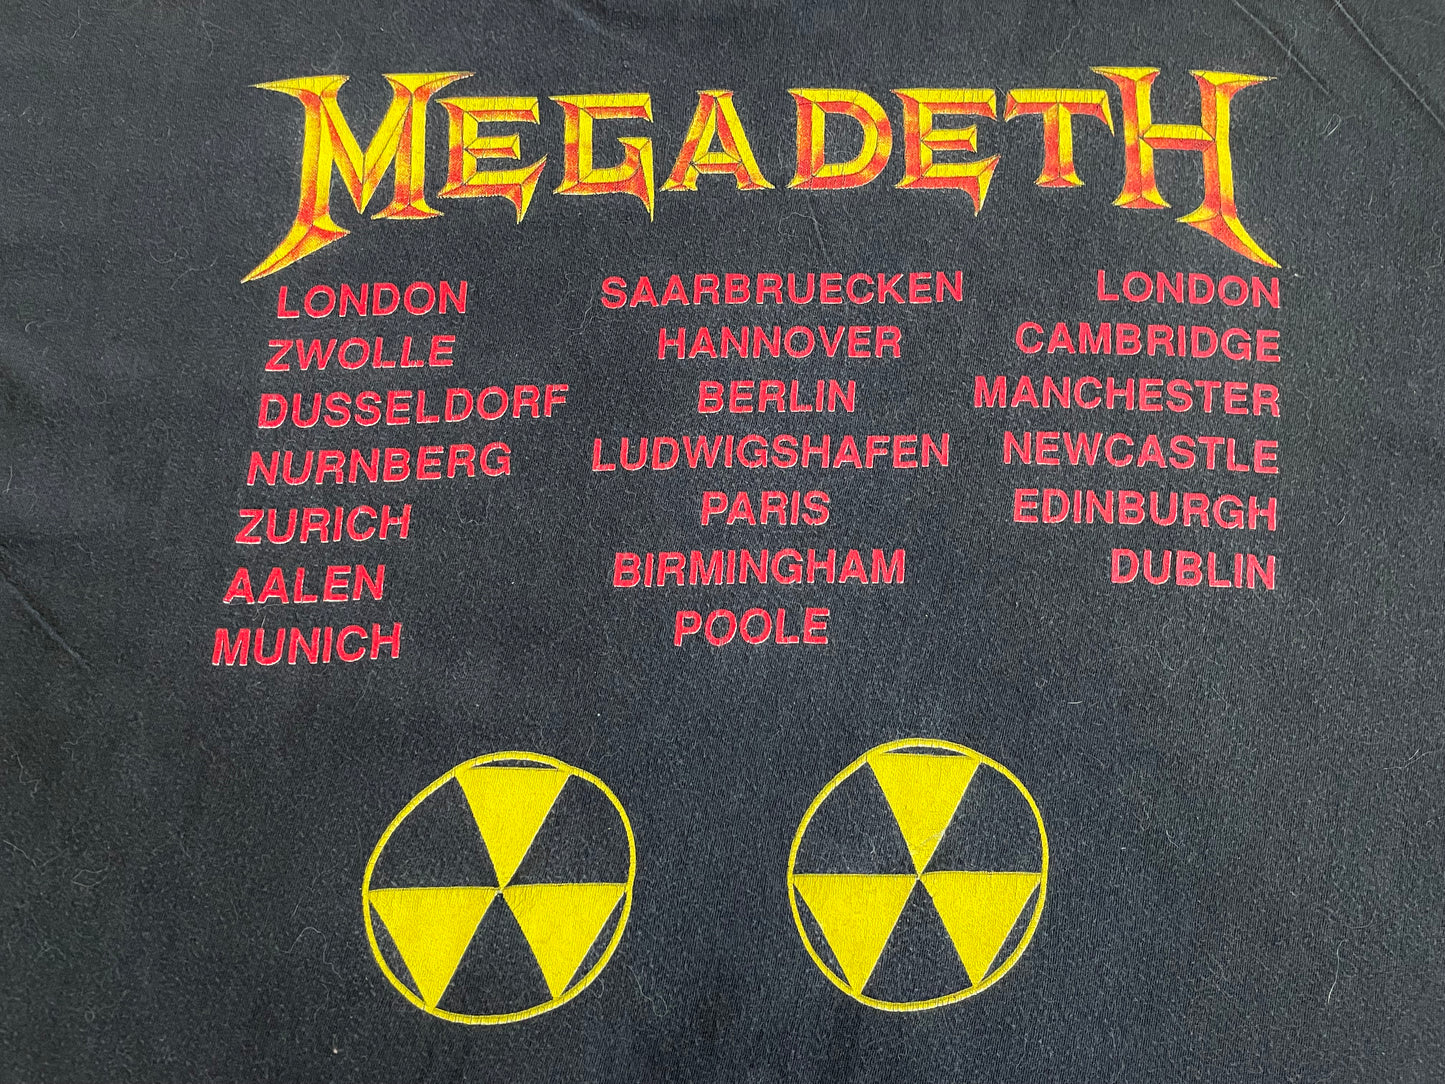 Megadeth - Rust In Peace - European Tour 1991 - Original Vintage t-shirt